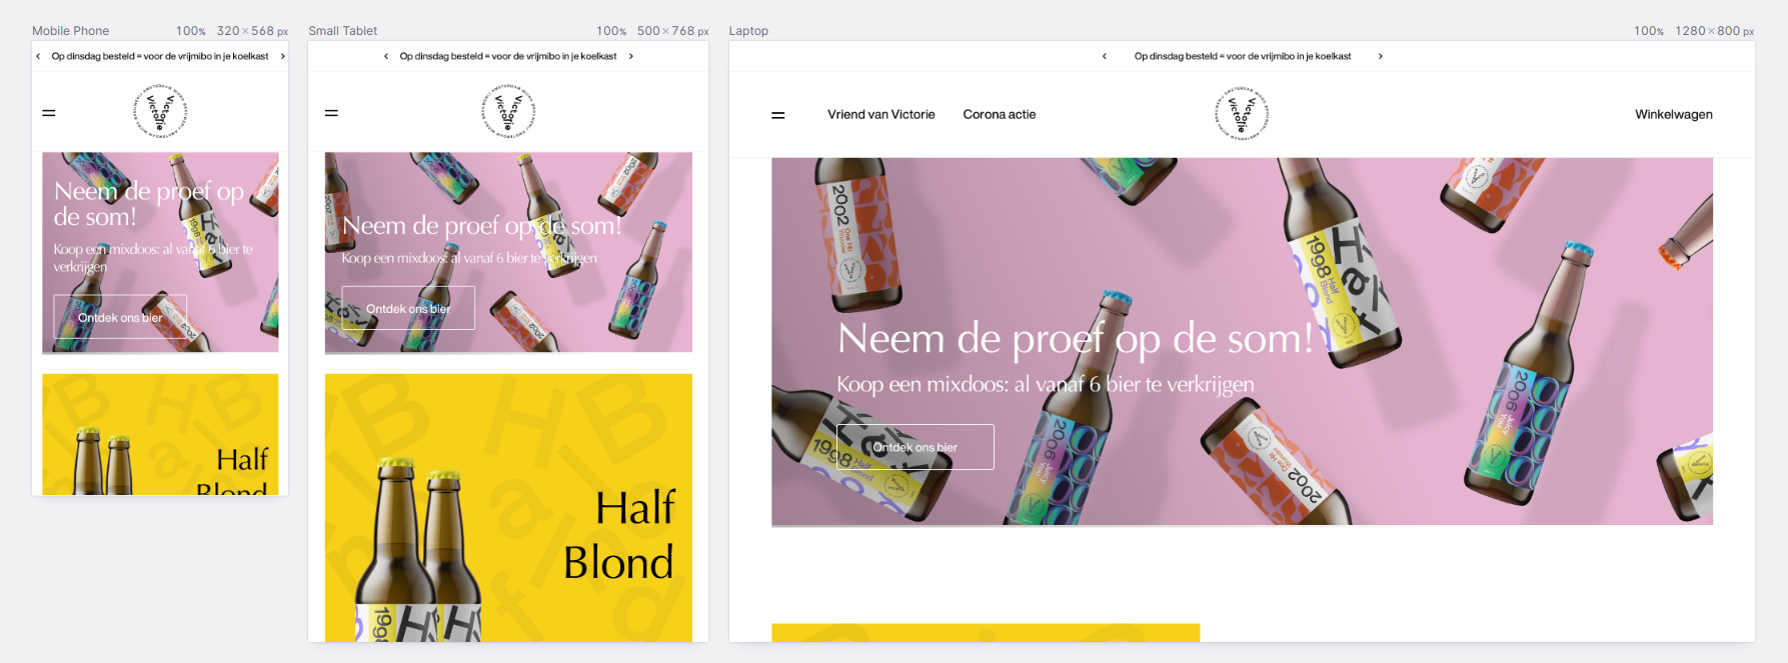 Brouwerij Victorie website at three different screen sizes